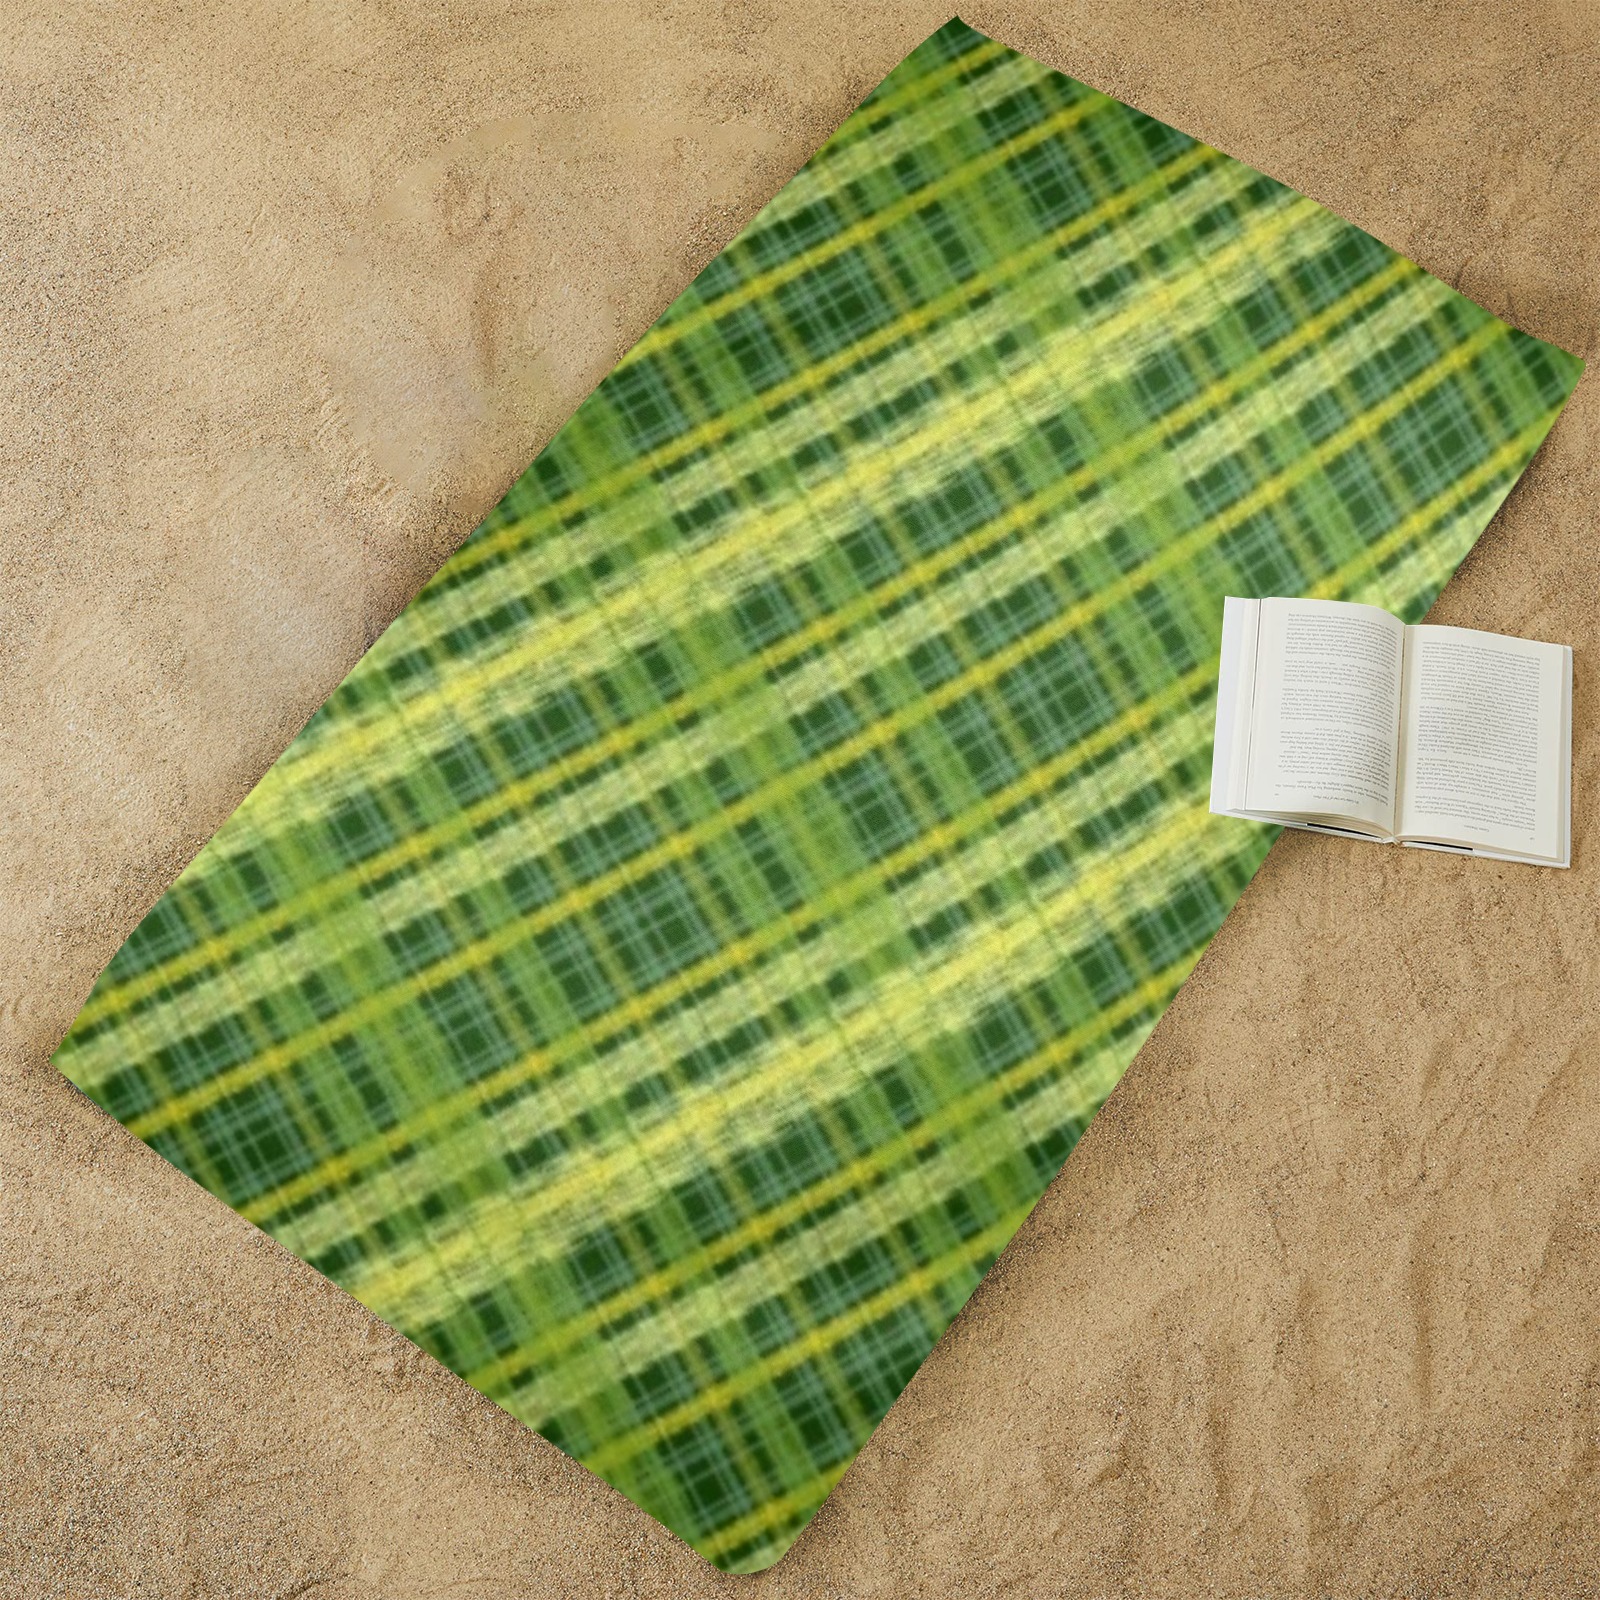 khan xanh Beach Towel 29"x58"(NEW)